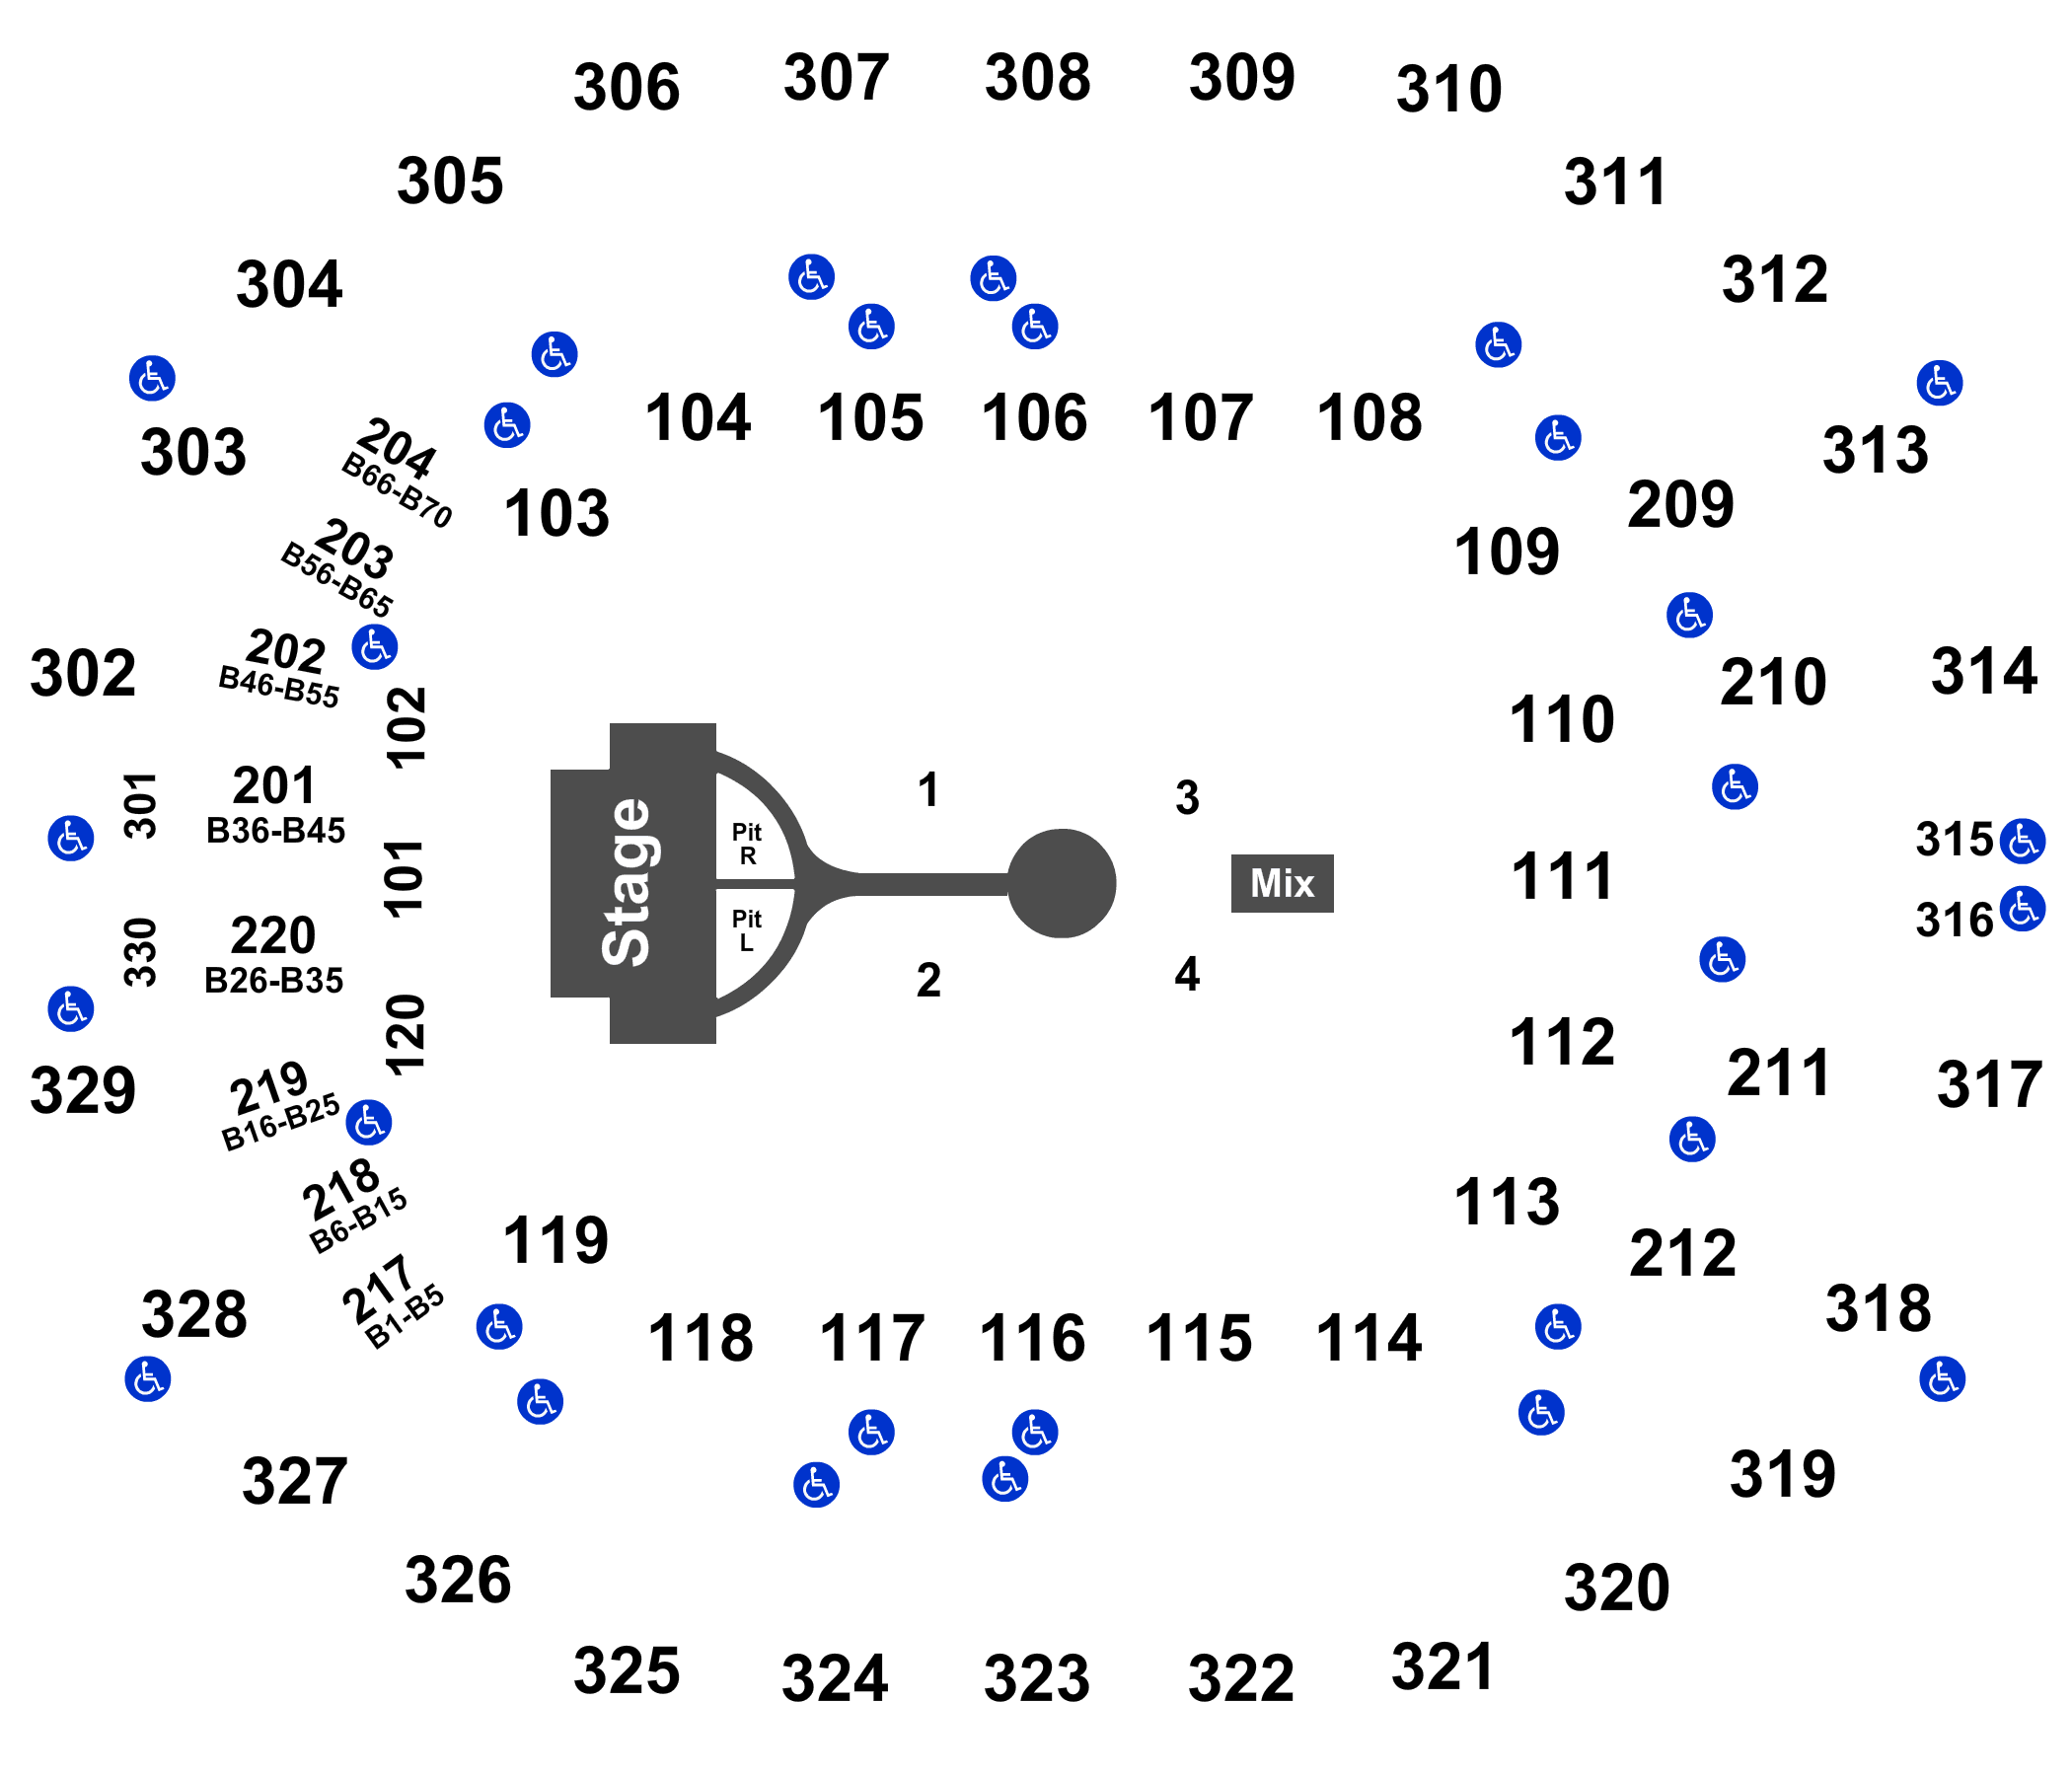 Taylor Swift Yum Center Seating Chart